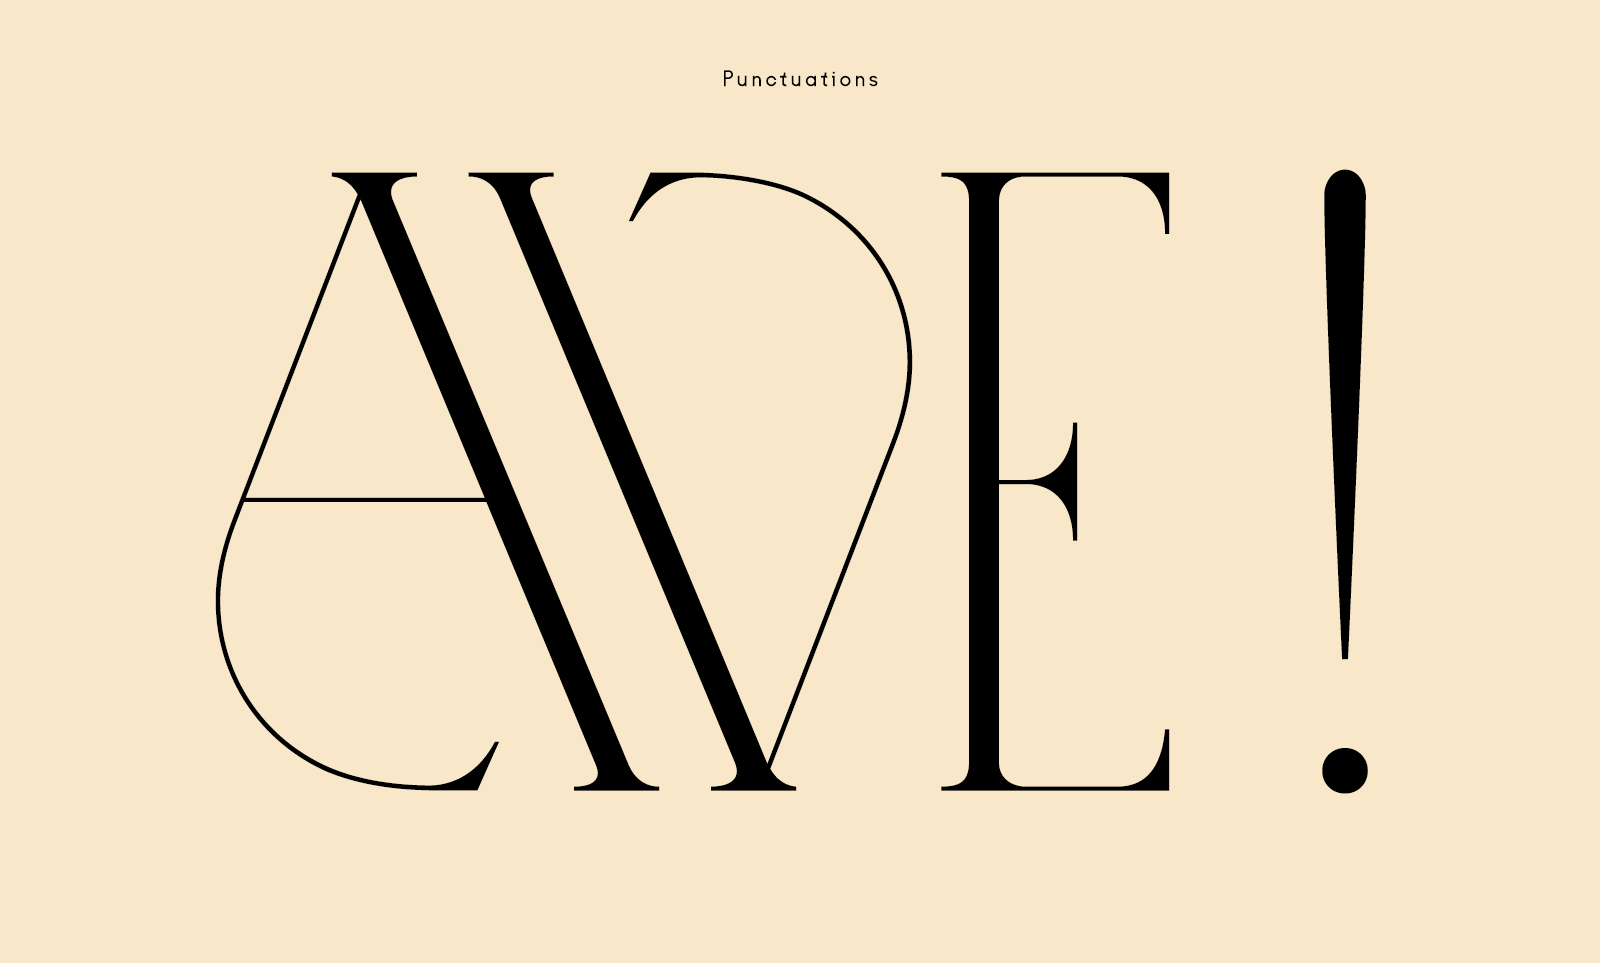 Love Typeface Việt hóa - 1 chiếc font cực đẹp